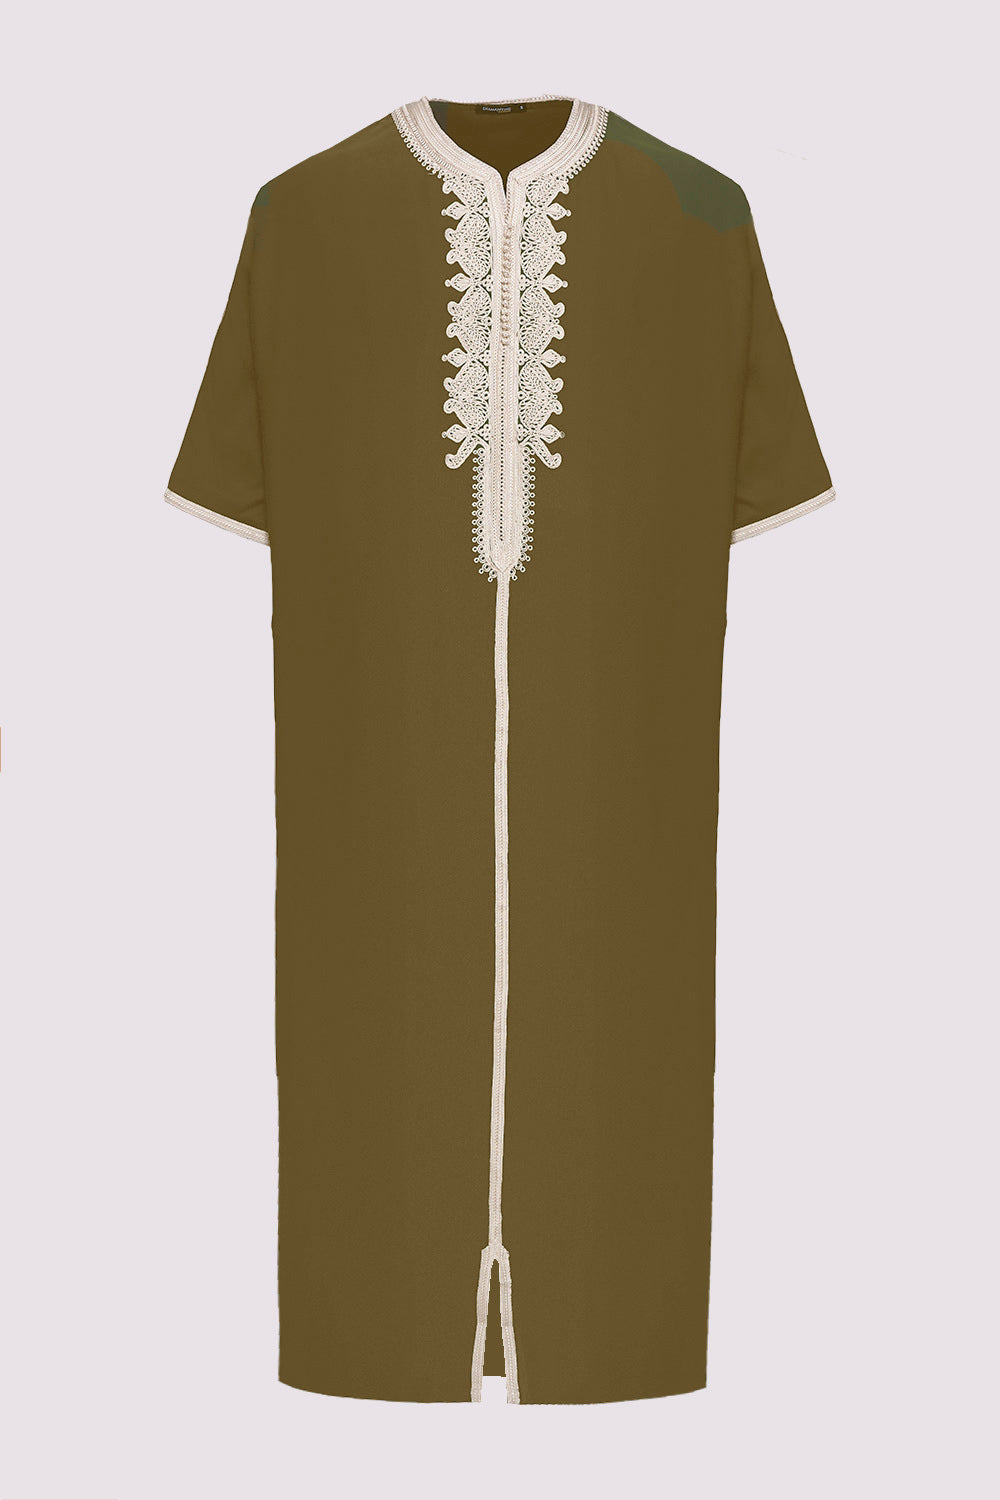 Gandoura Hamza Embroidered Short Sleeve Men's Long Robe Thobe in Khaki